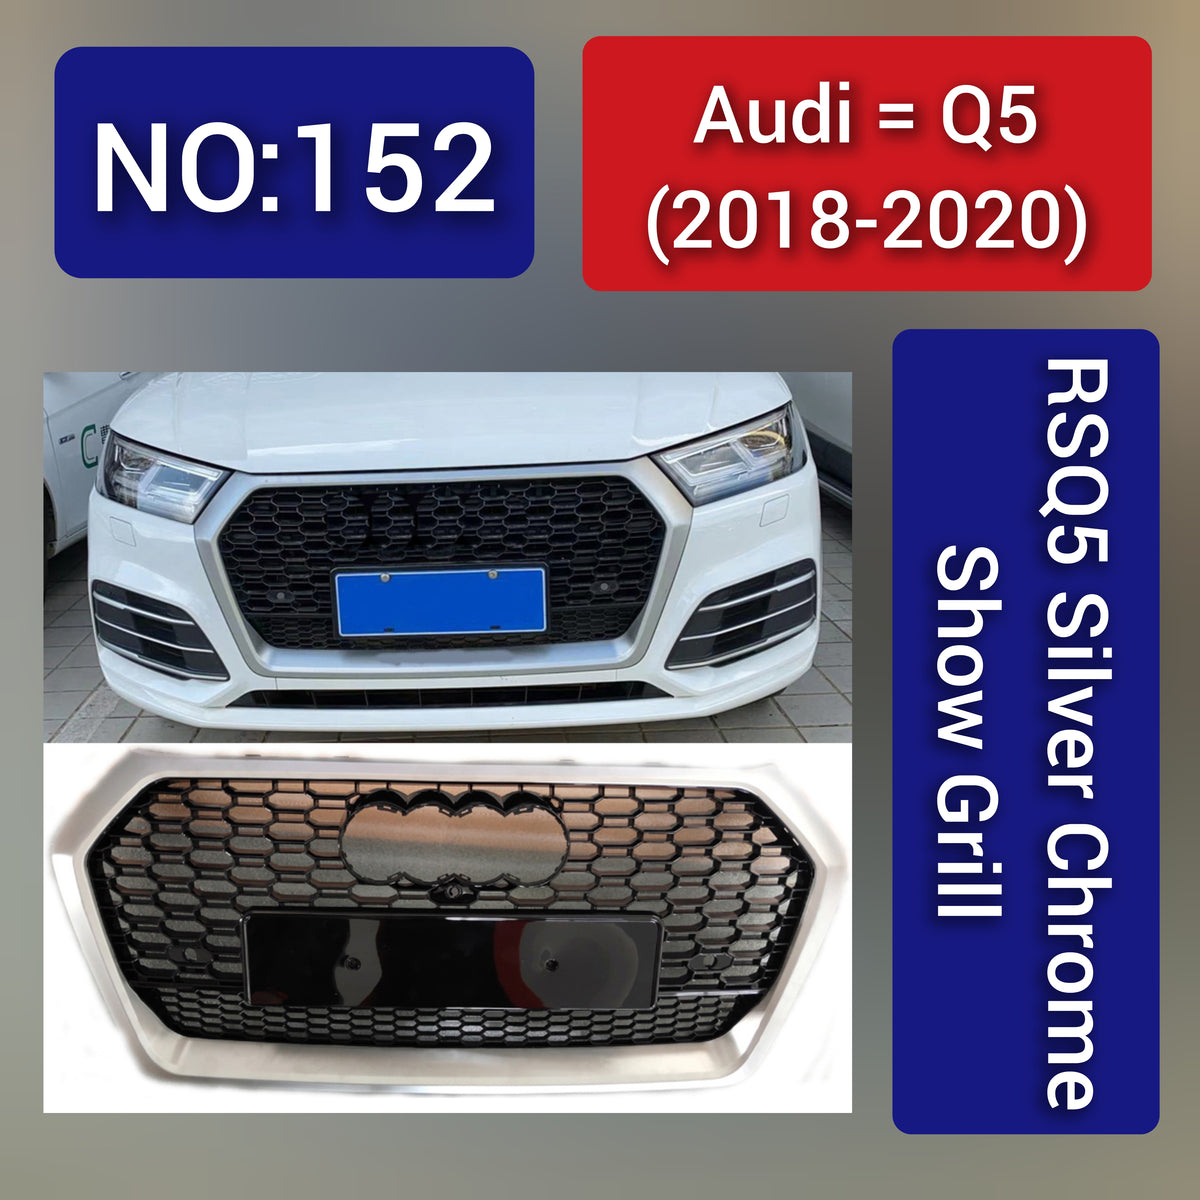 Audi Q5 (2018-20) RSQ5 Silver Chrome Show grill